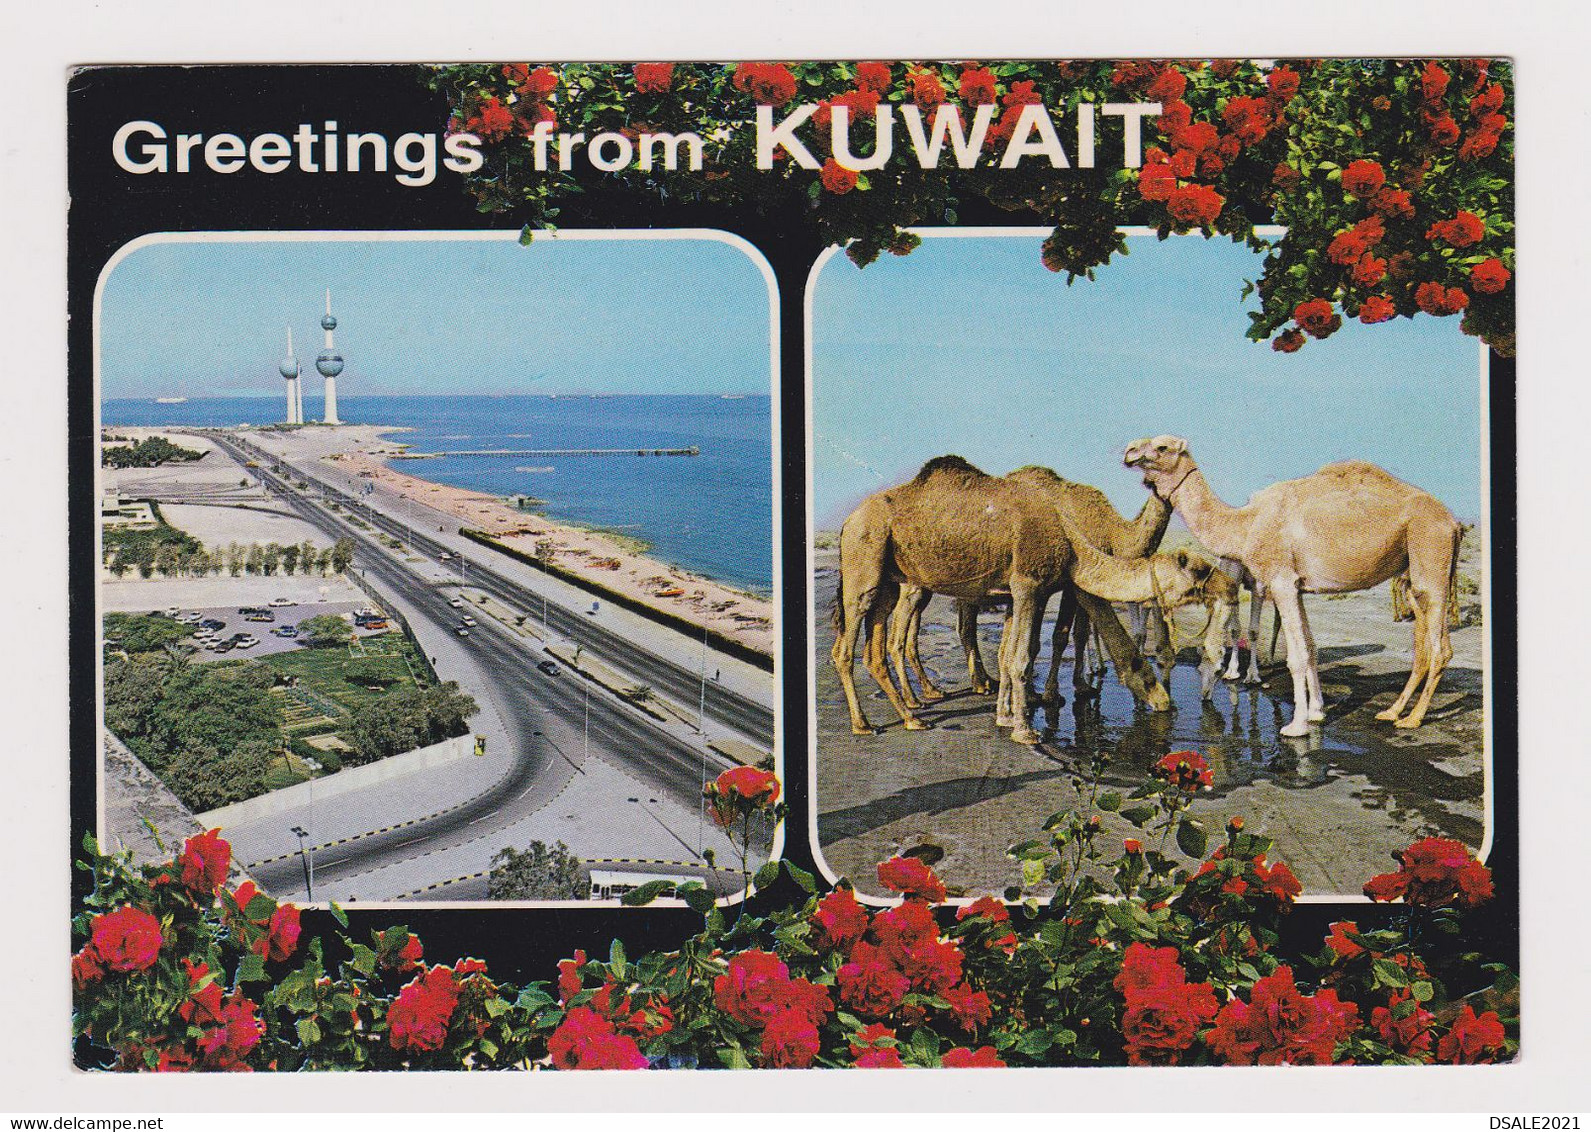 KUWAIT Greetings From Kuwait View Vintage Photo Postcard CPA (53267) - Koweït